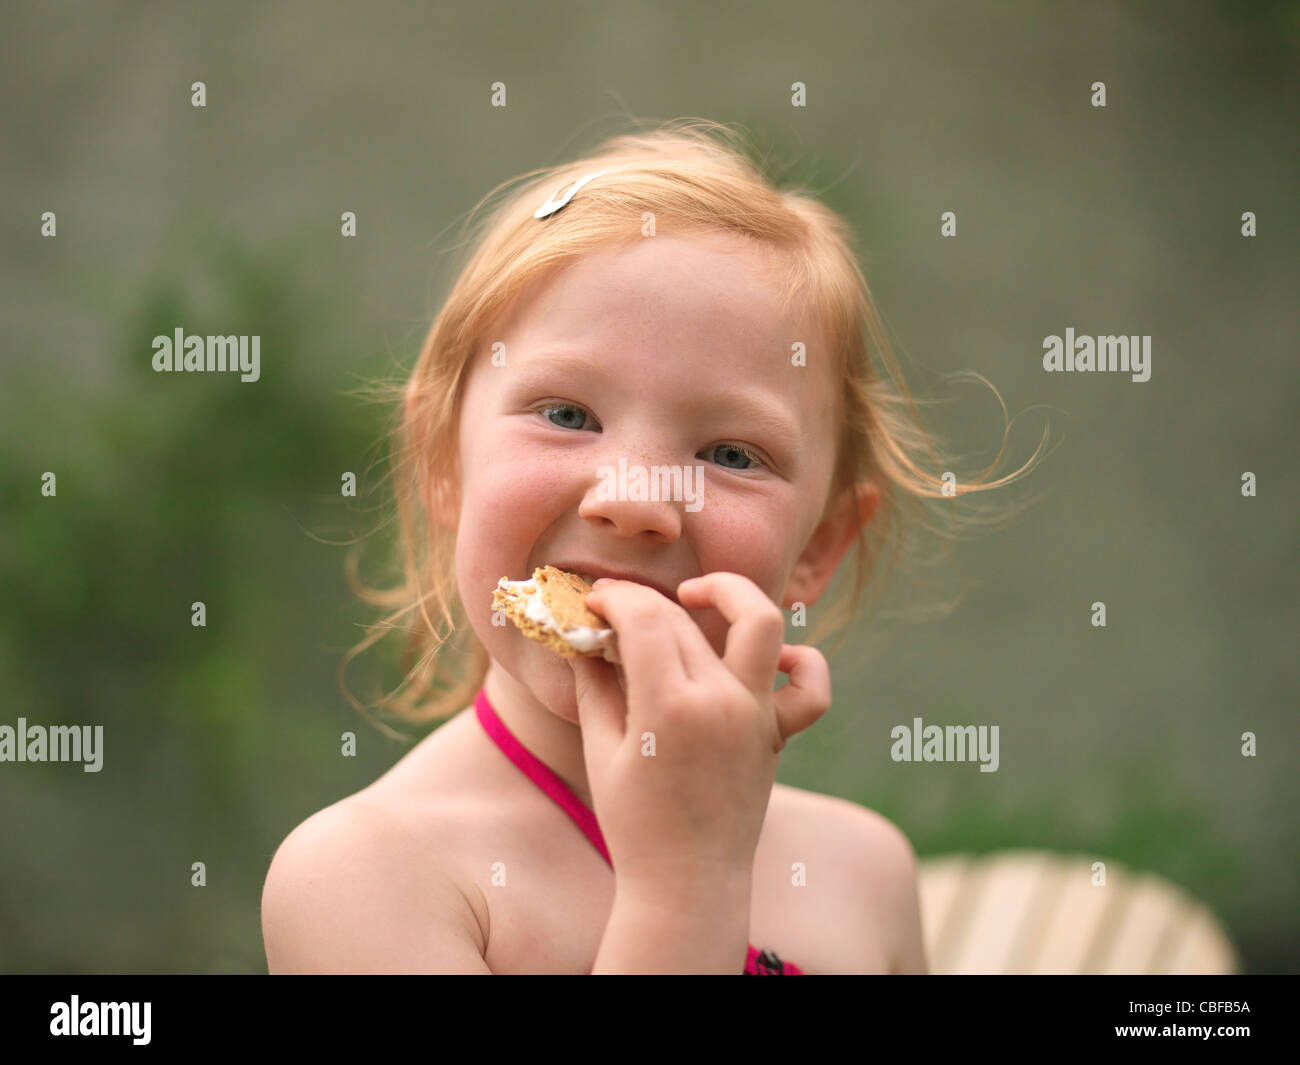 Little girl child eating a sandwich outside Stock Photo